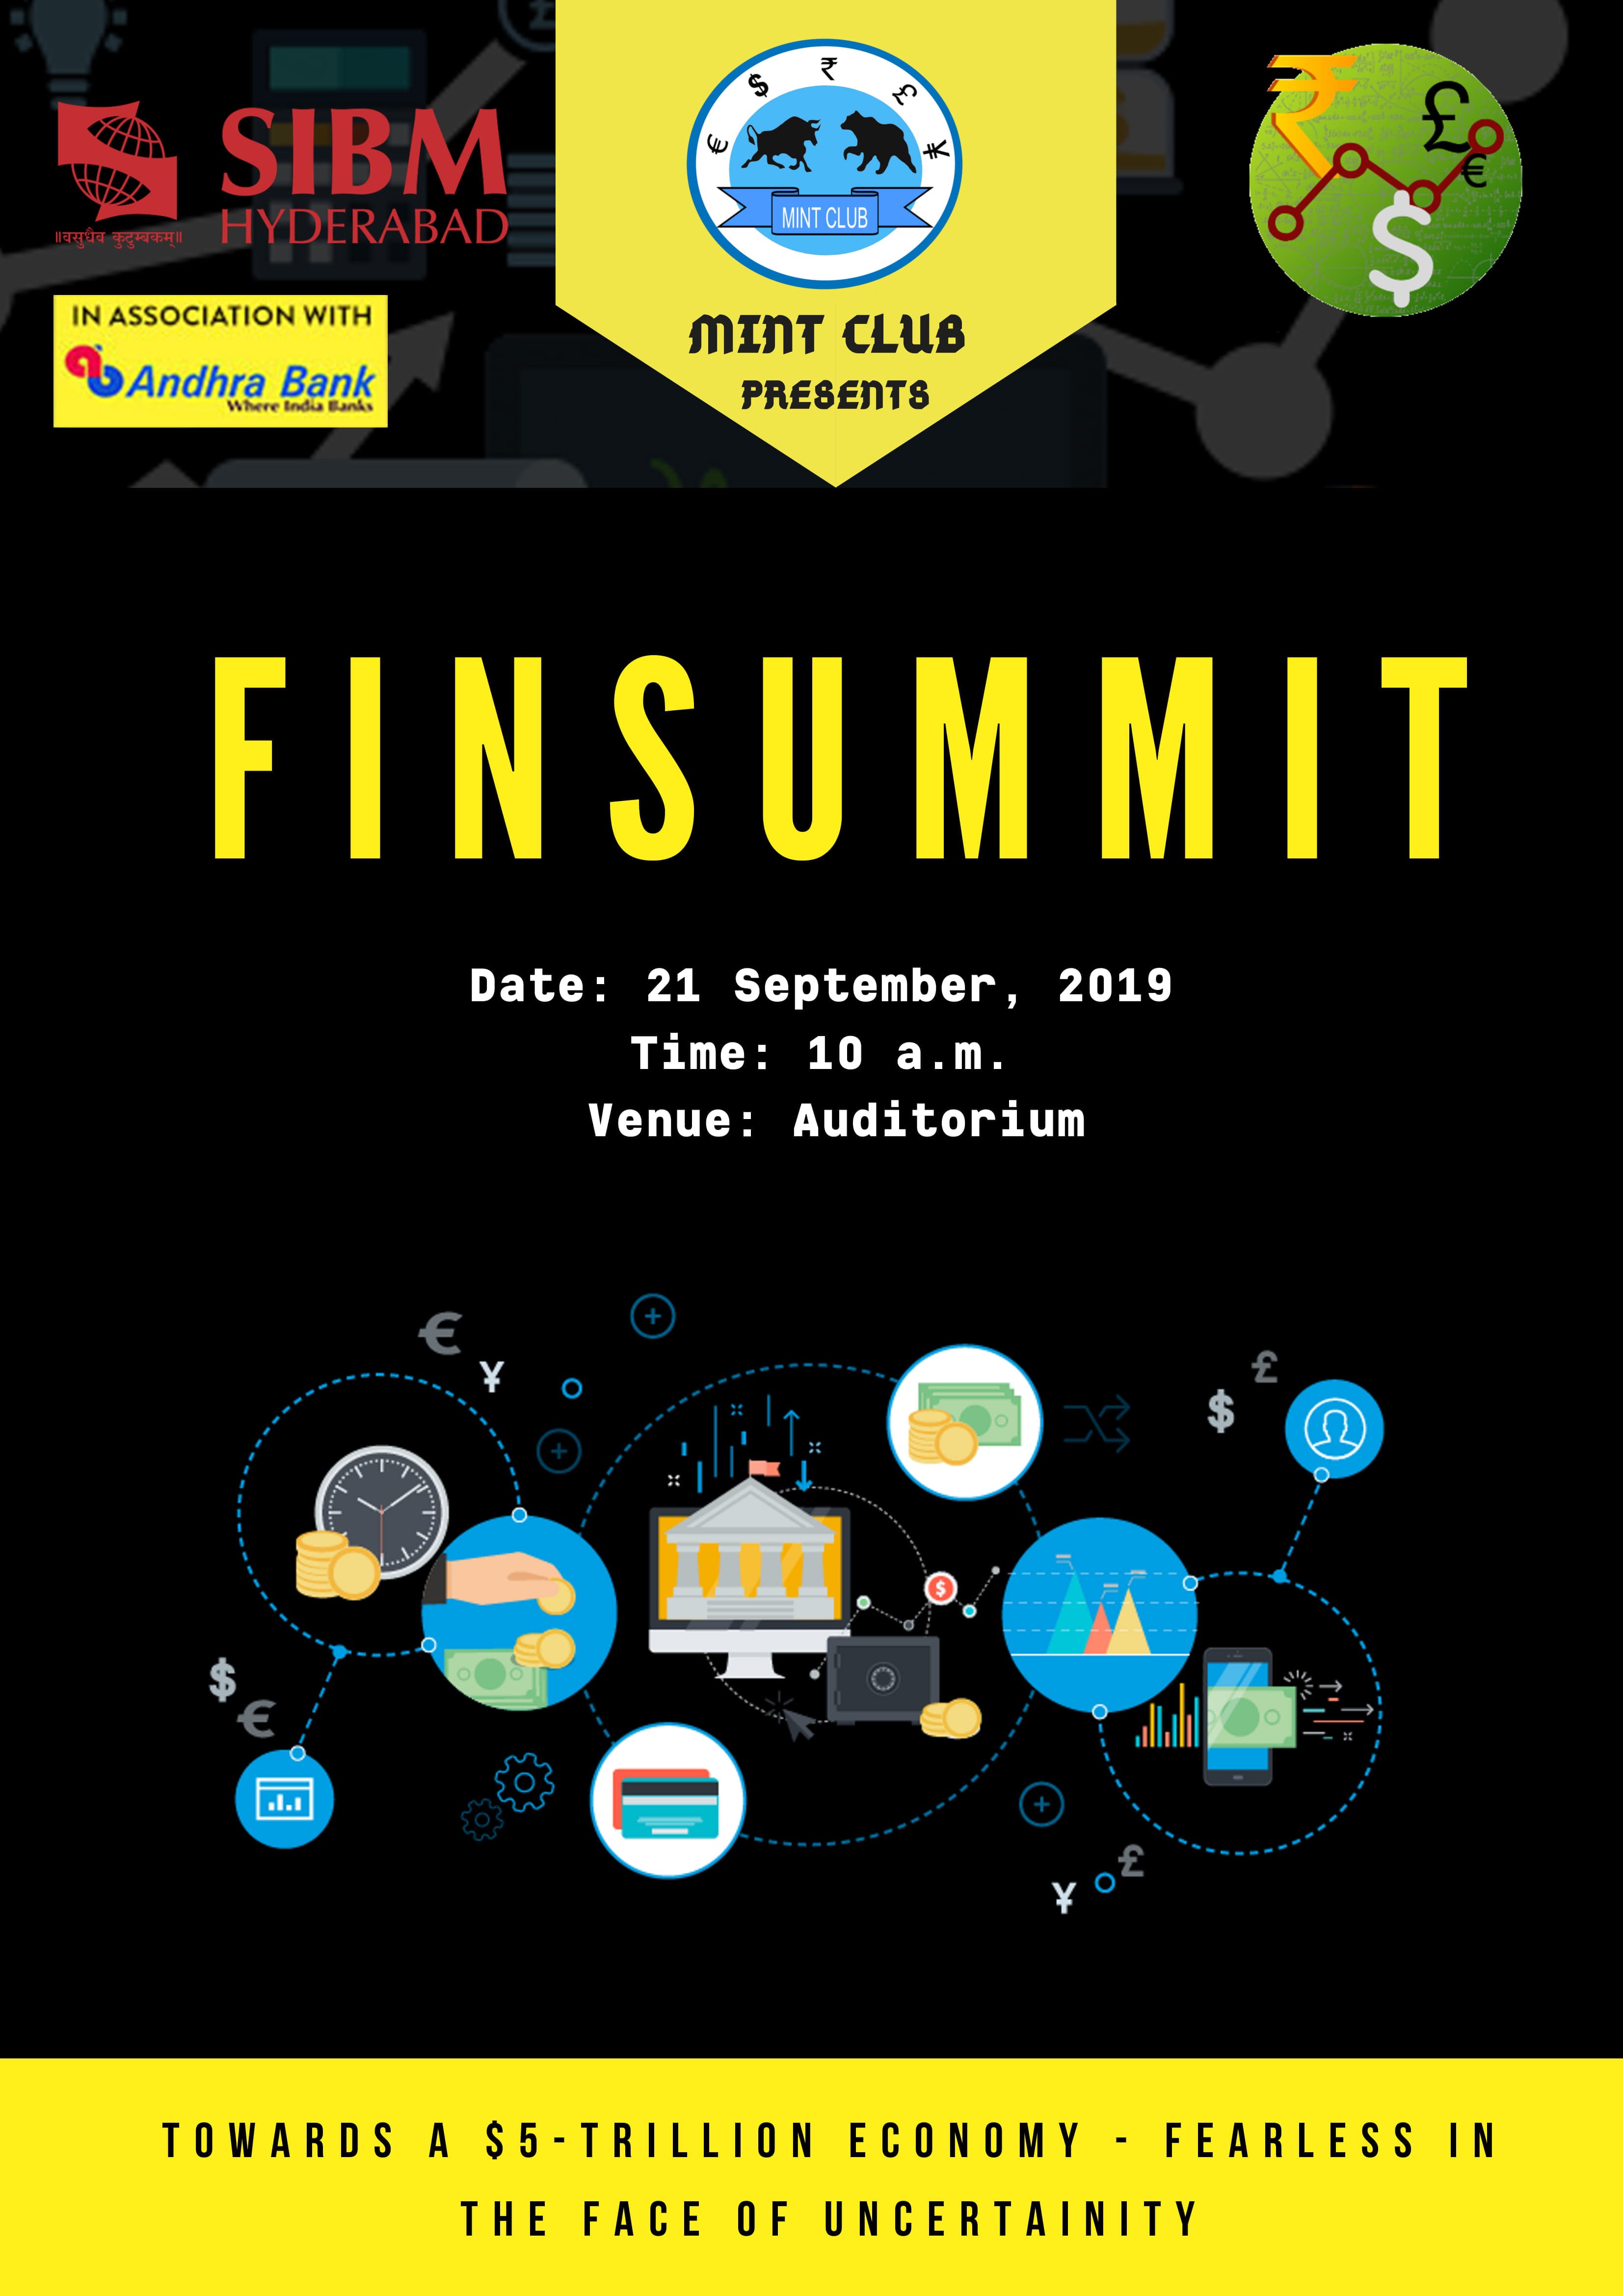 FINSUMMIT 2.0 event of SIBM